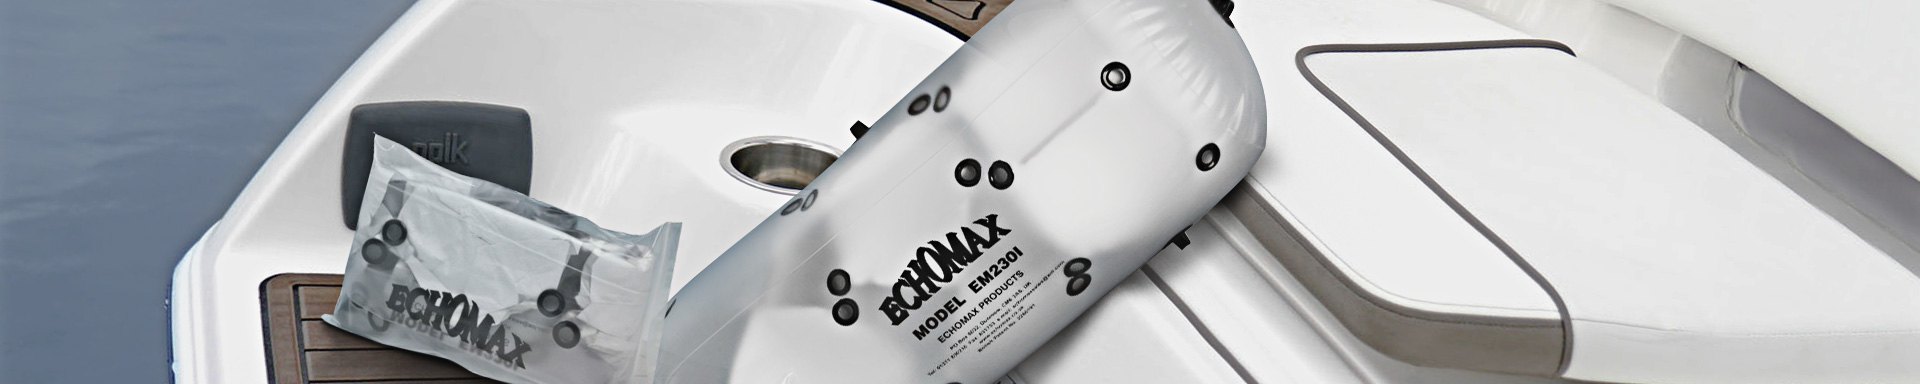 Echomax Radars